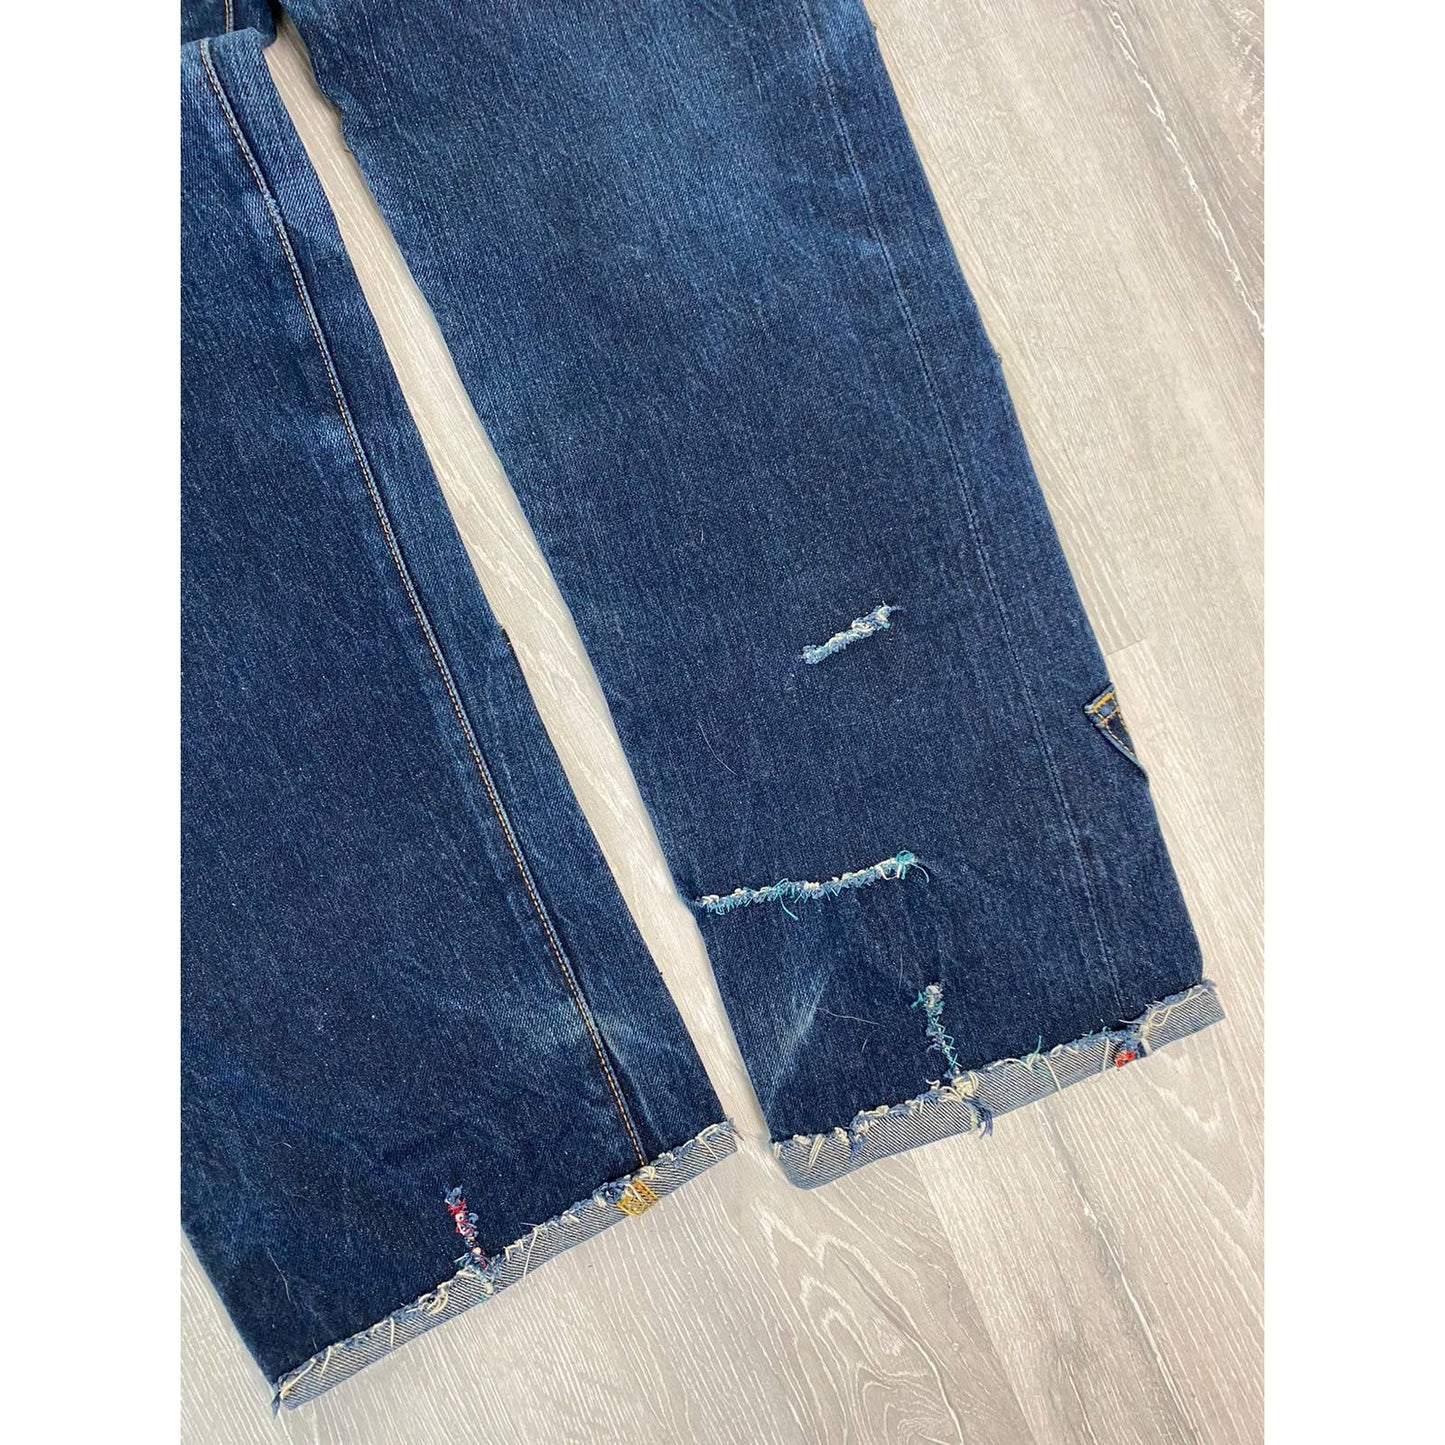 Evisu multipocket jeans multicolor vintage selvedge denim